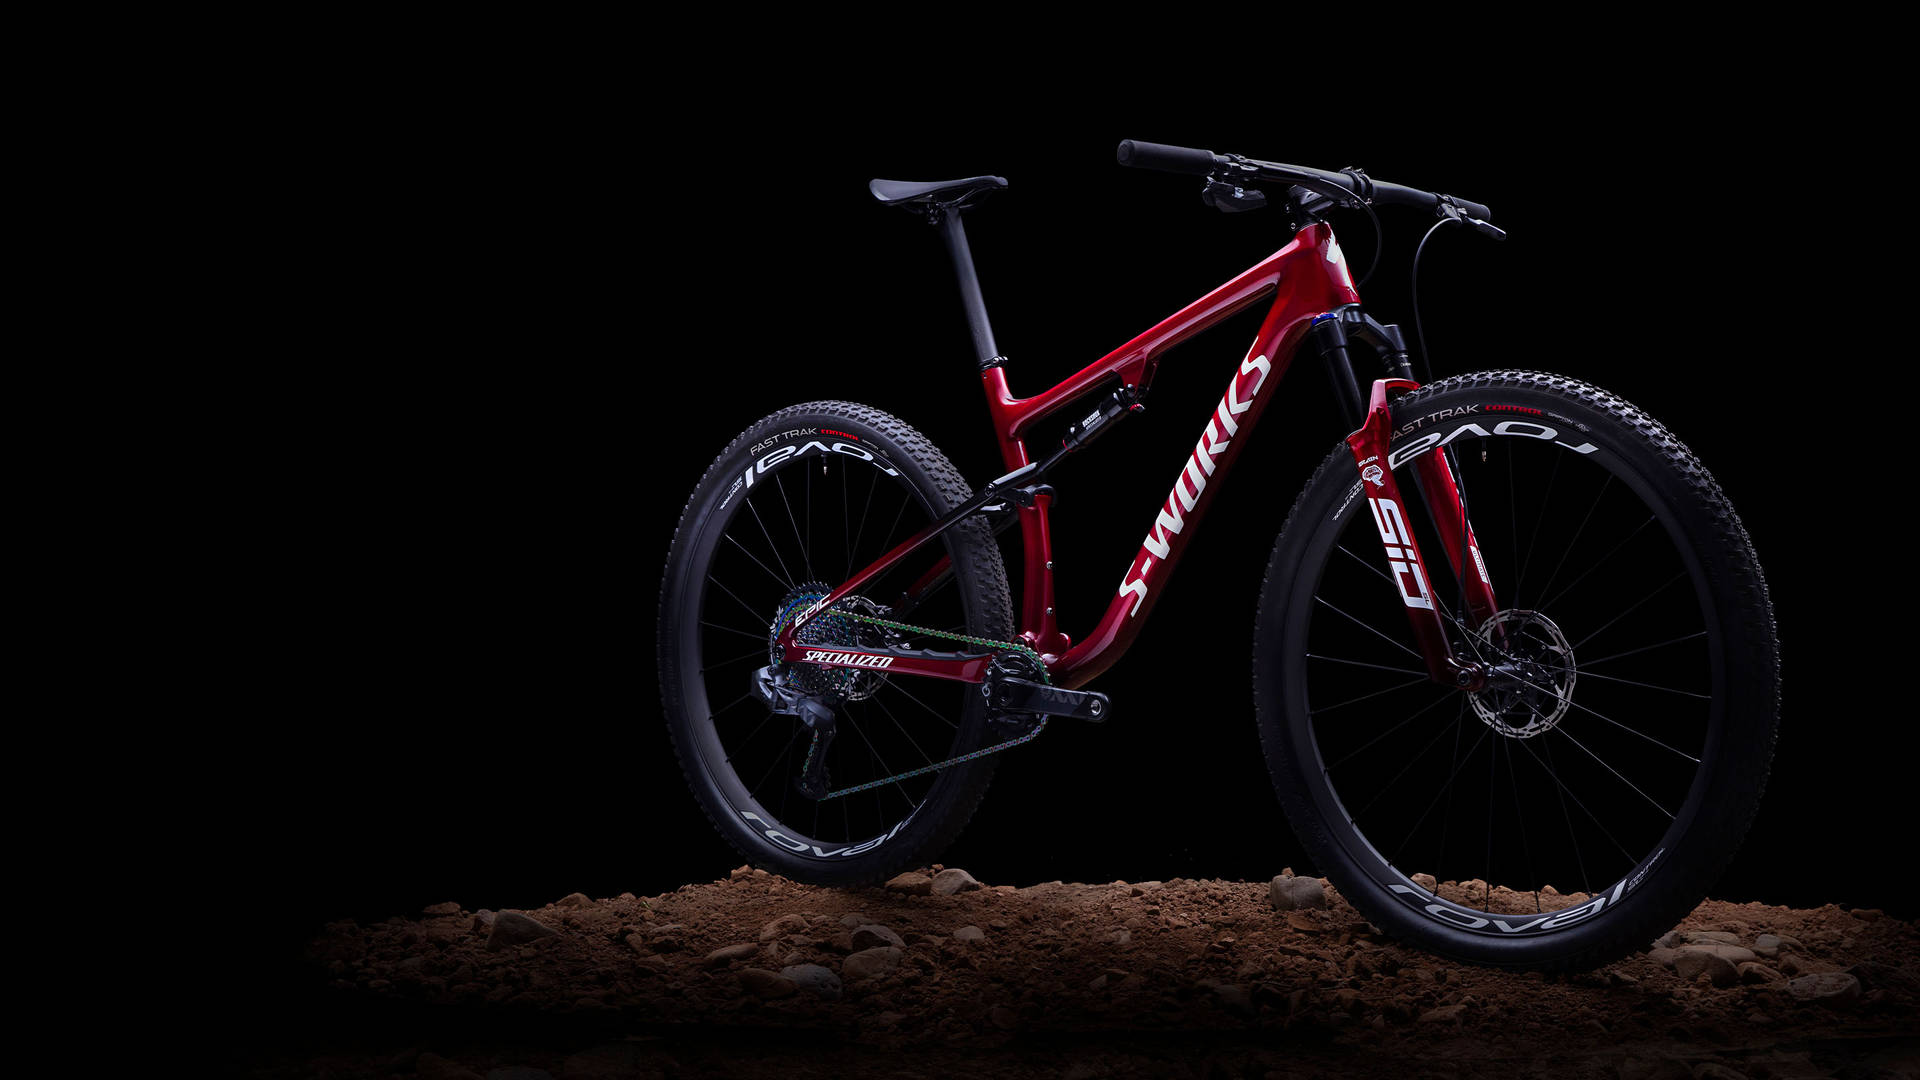 Red Specialized Bike In Darkness Wallpaper